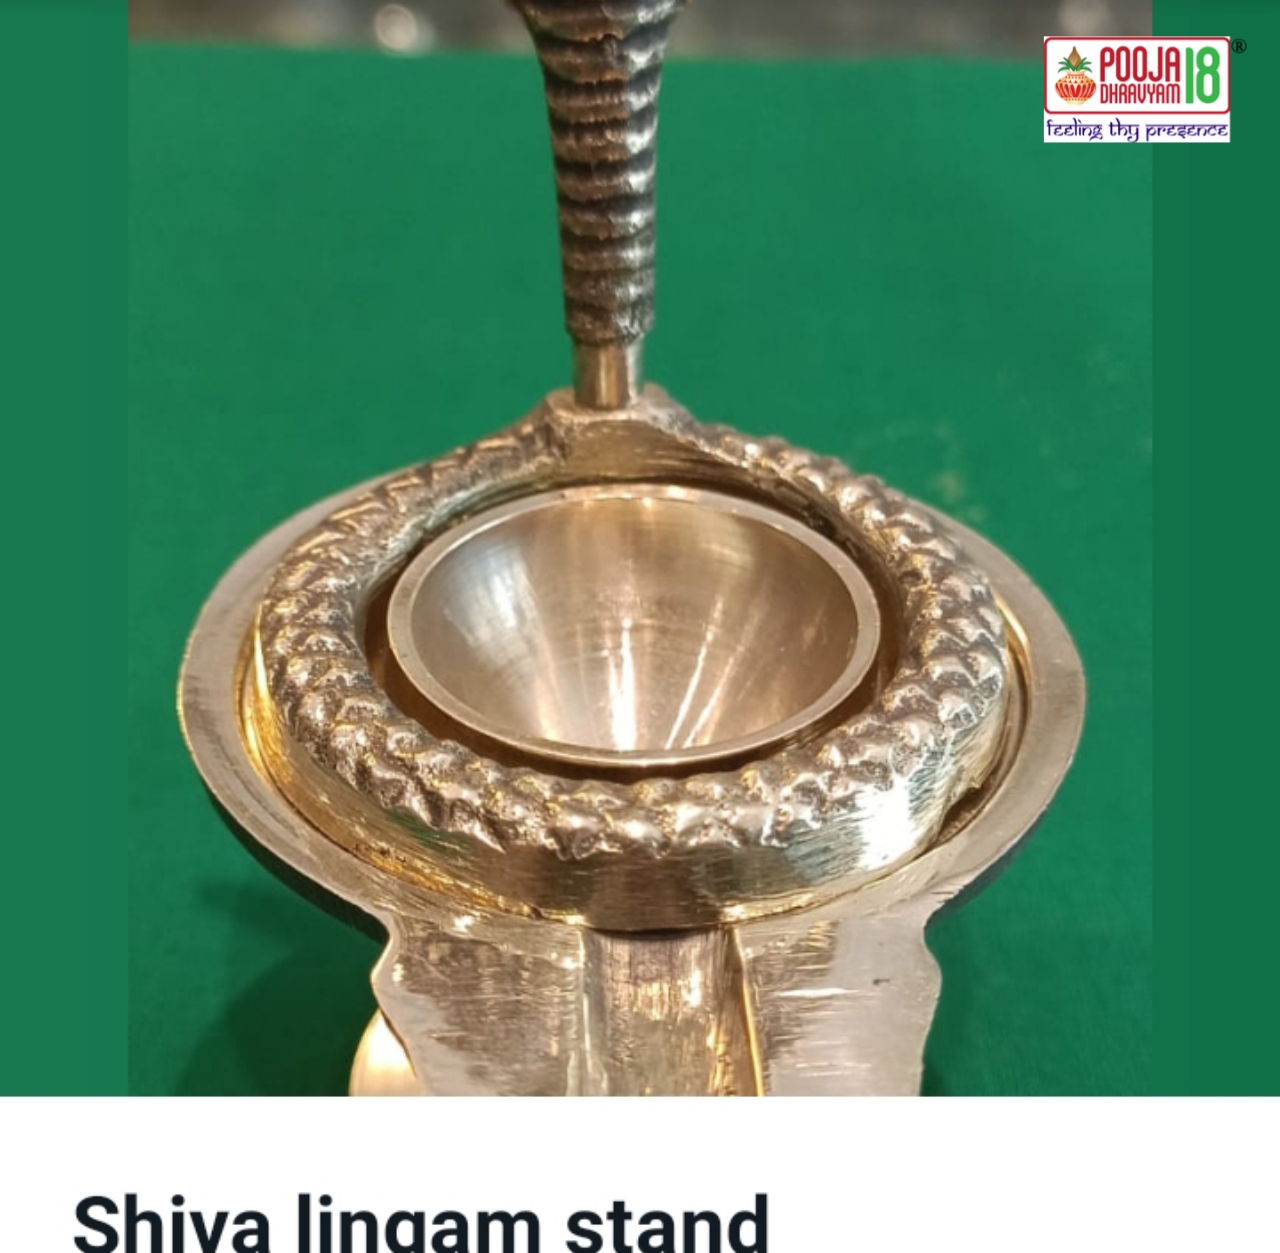 Shiva lingam stand